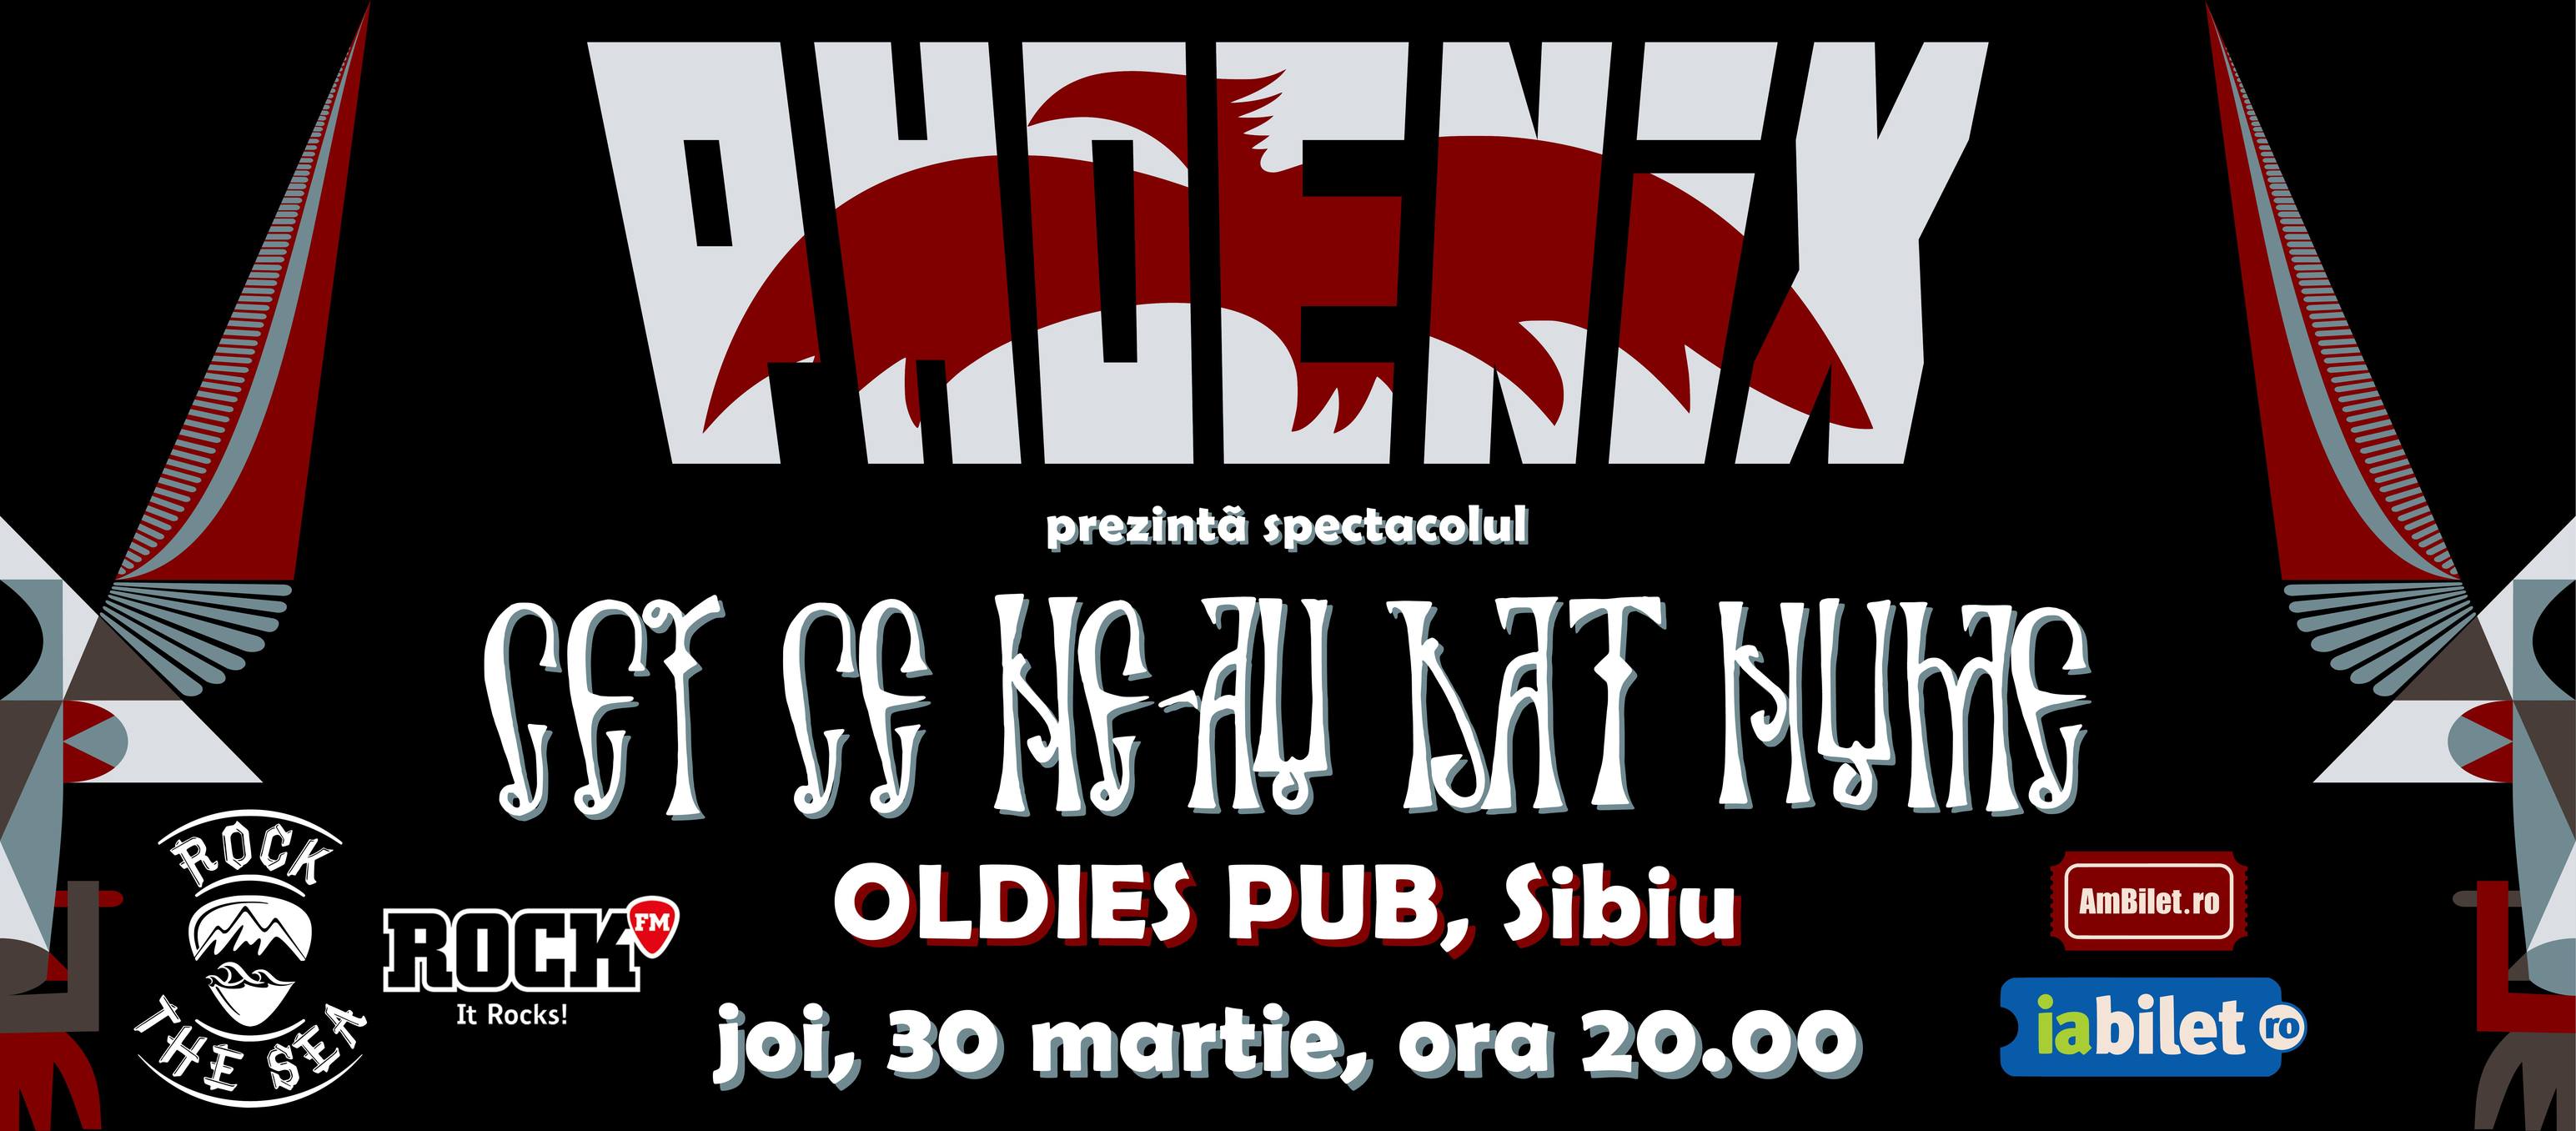 𝐏𝐇𝐎𝐄𝐍𝐈𝐗 - Cei ce ne-au dat nume @ Oldies Pub @ Sibiu